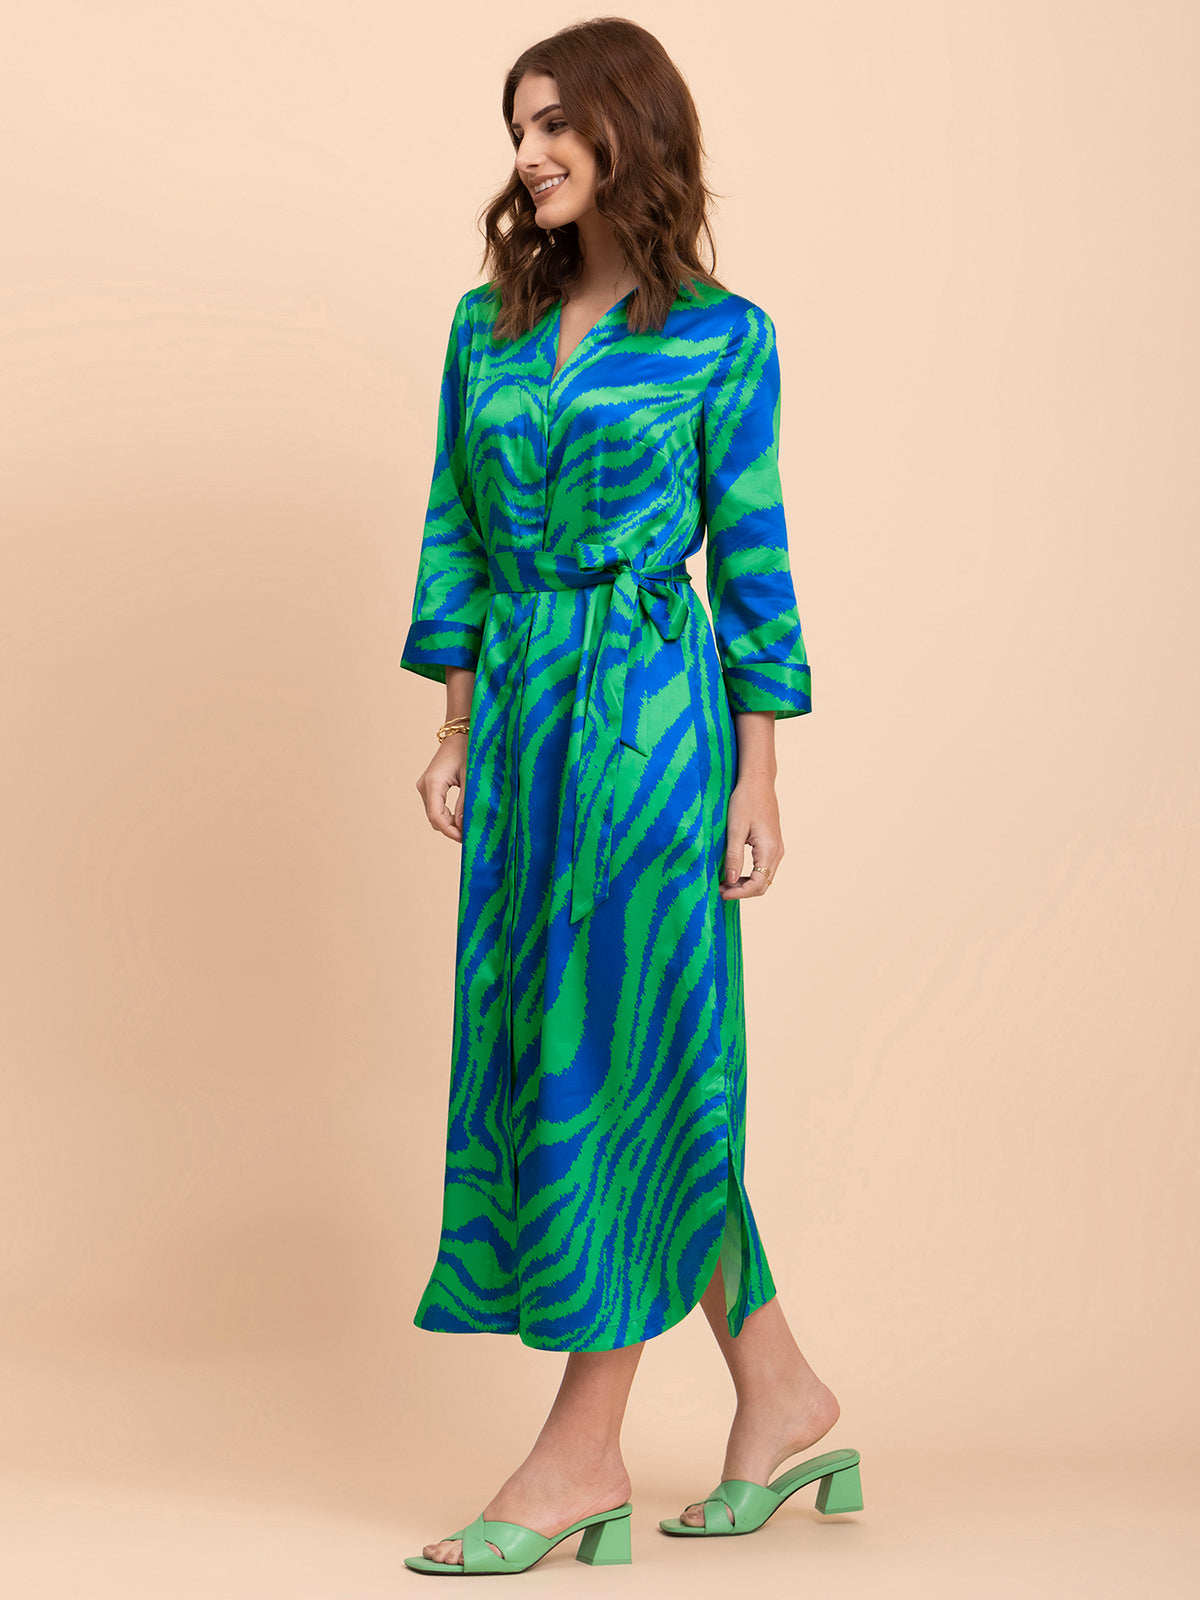 Satin Animal Print A-Line Dress - Royal Blue and Green